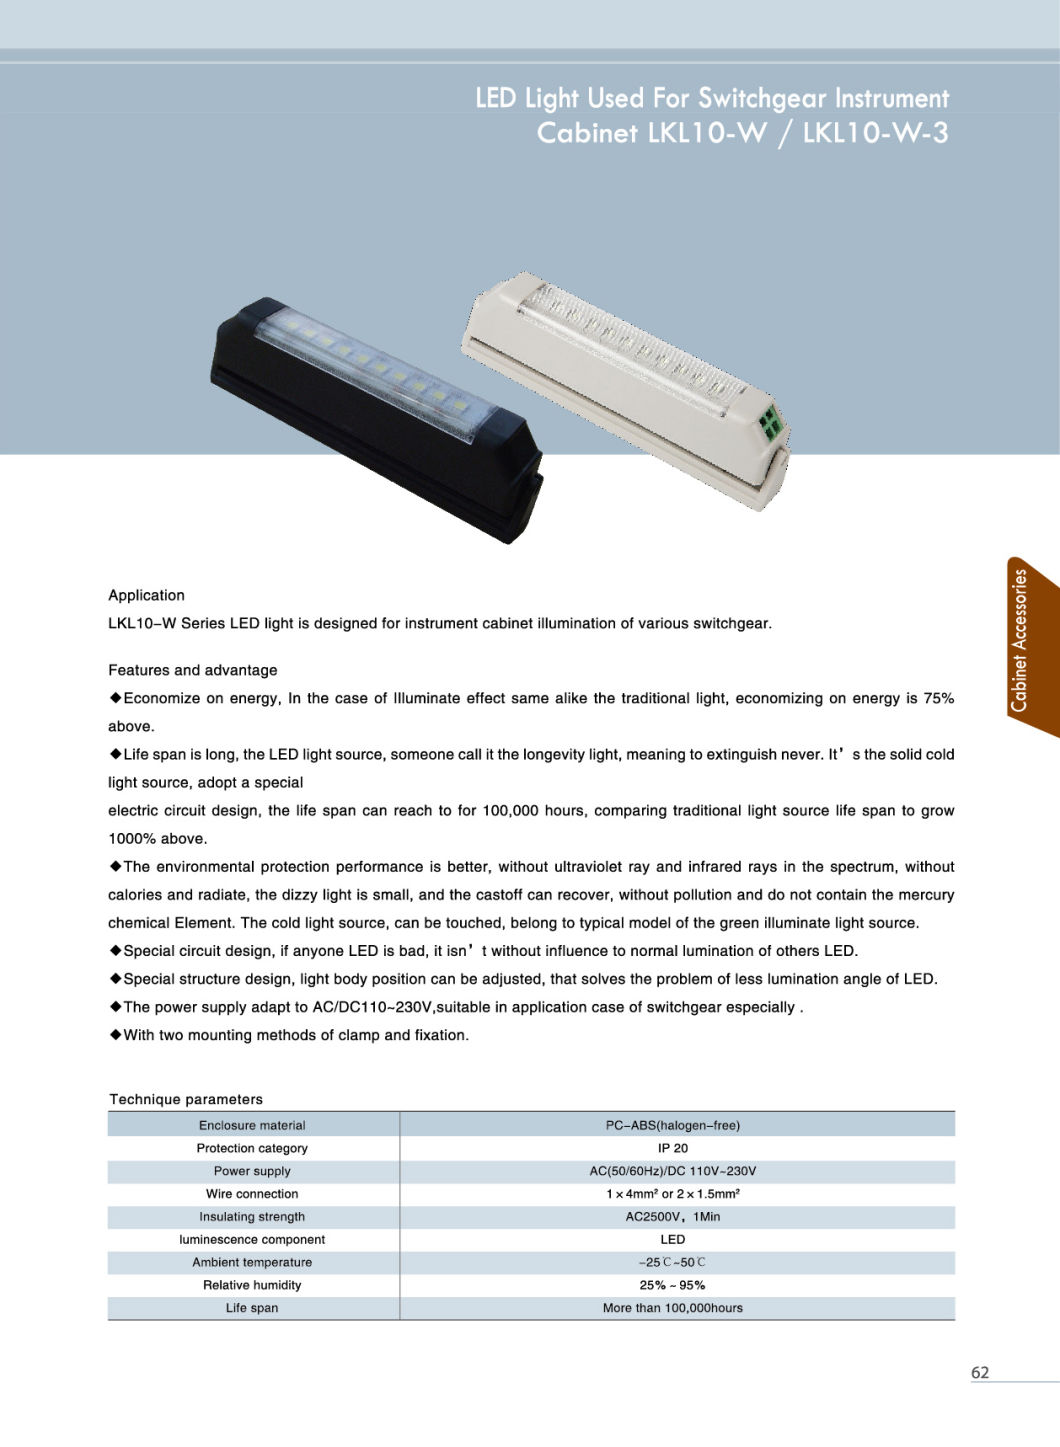 Cabinet Panel LED Light for Switchgear (LKL10-W/LKL10-W-3)